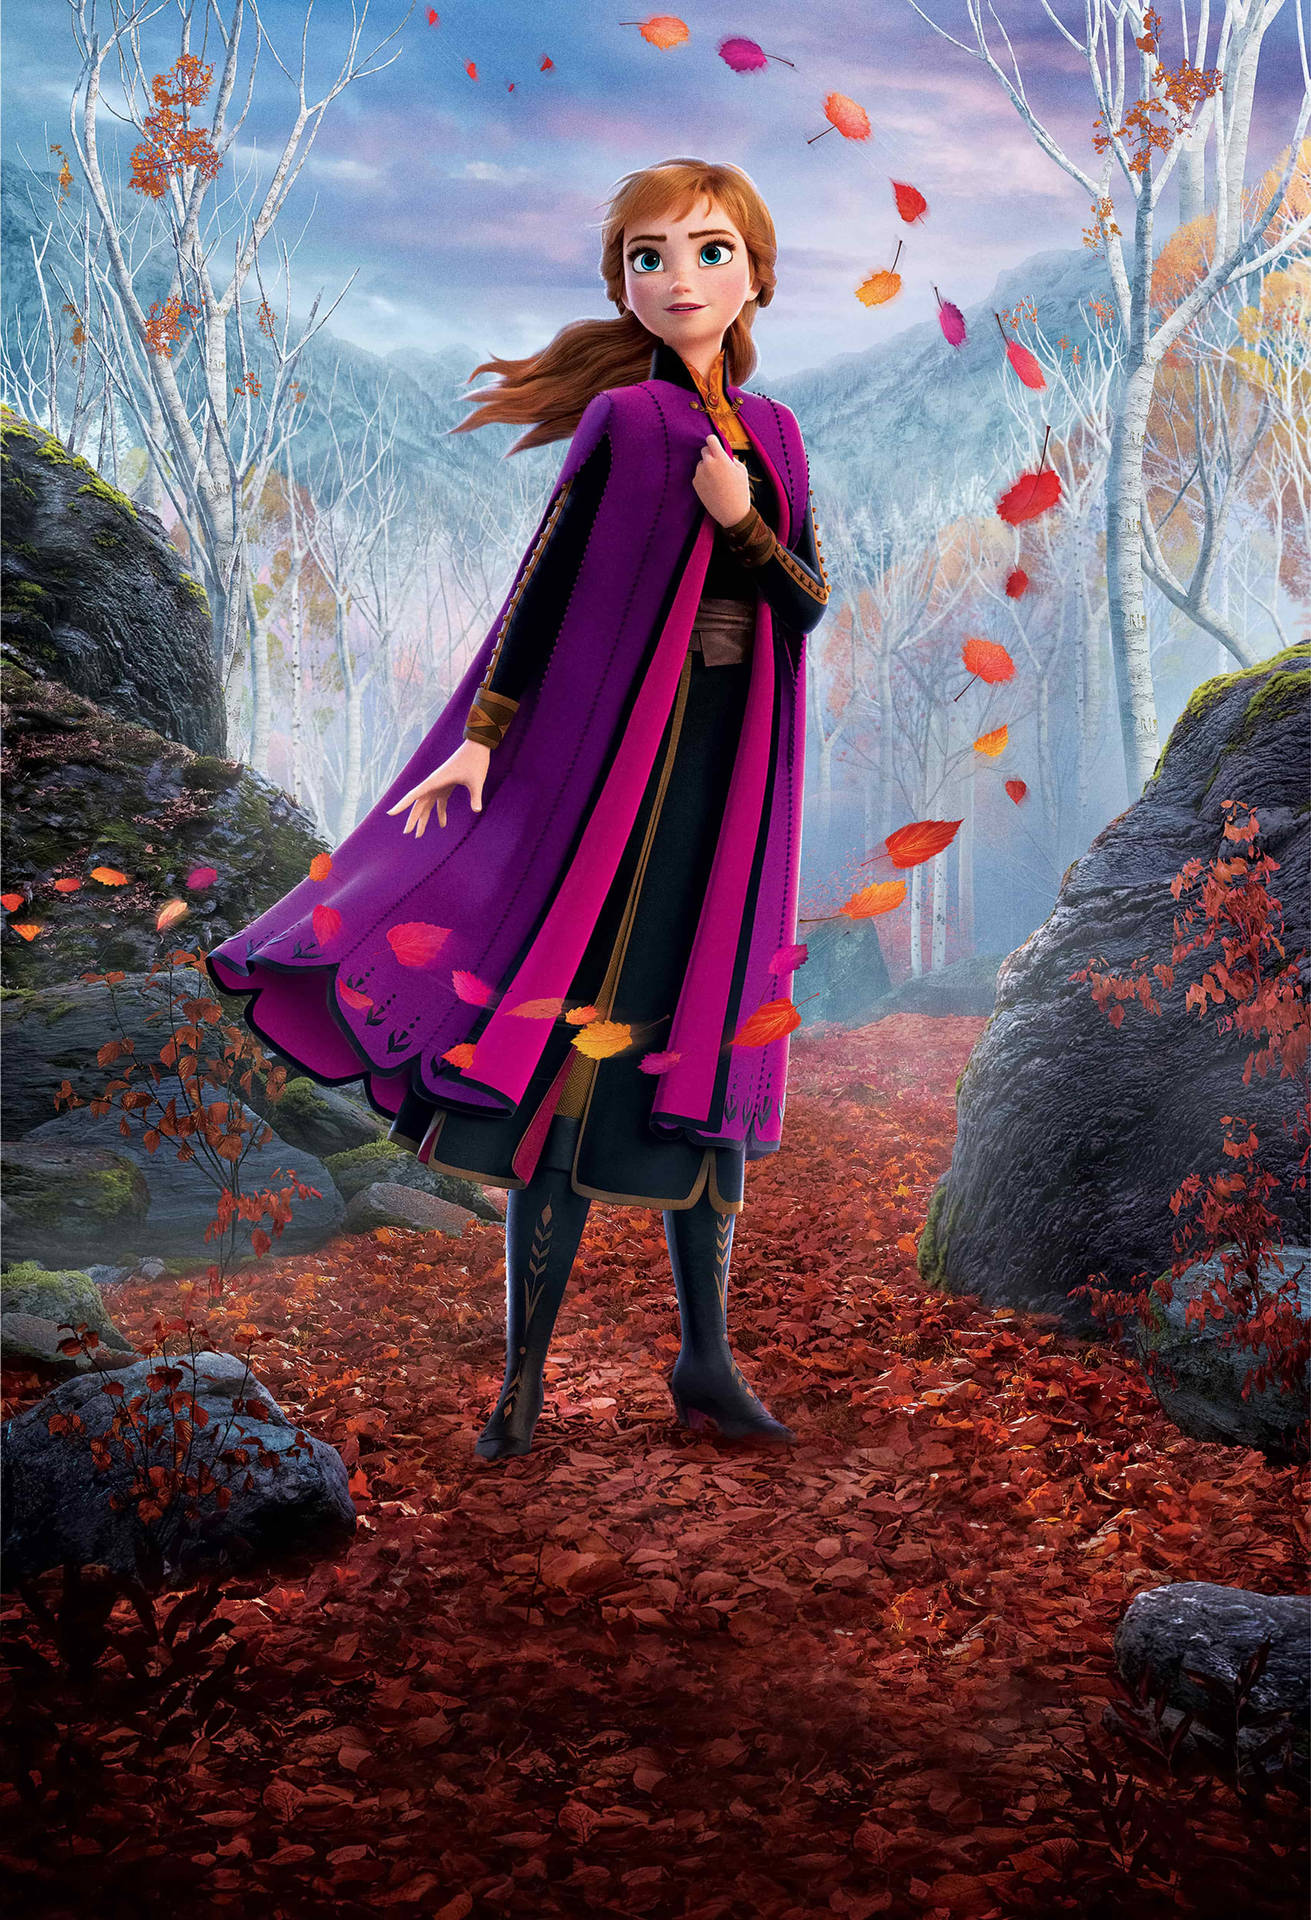 Disney Princess 3414X5000 Wallpaper and Background Image